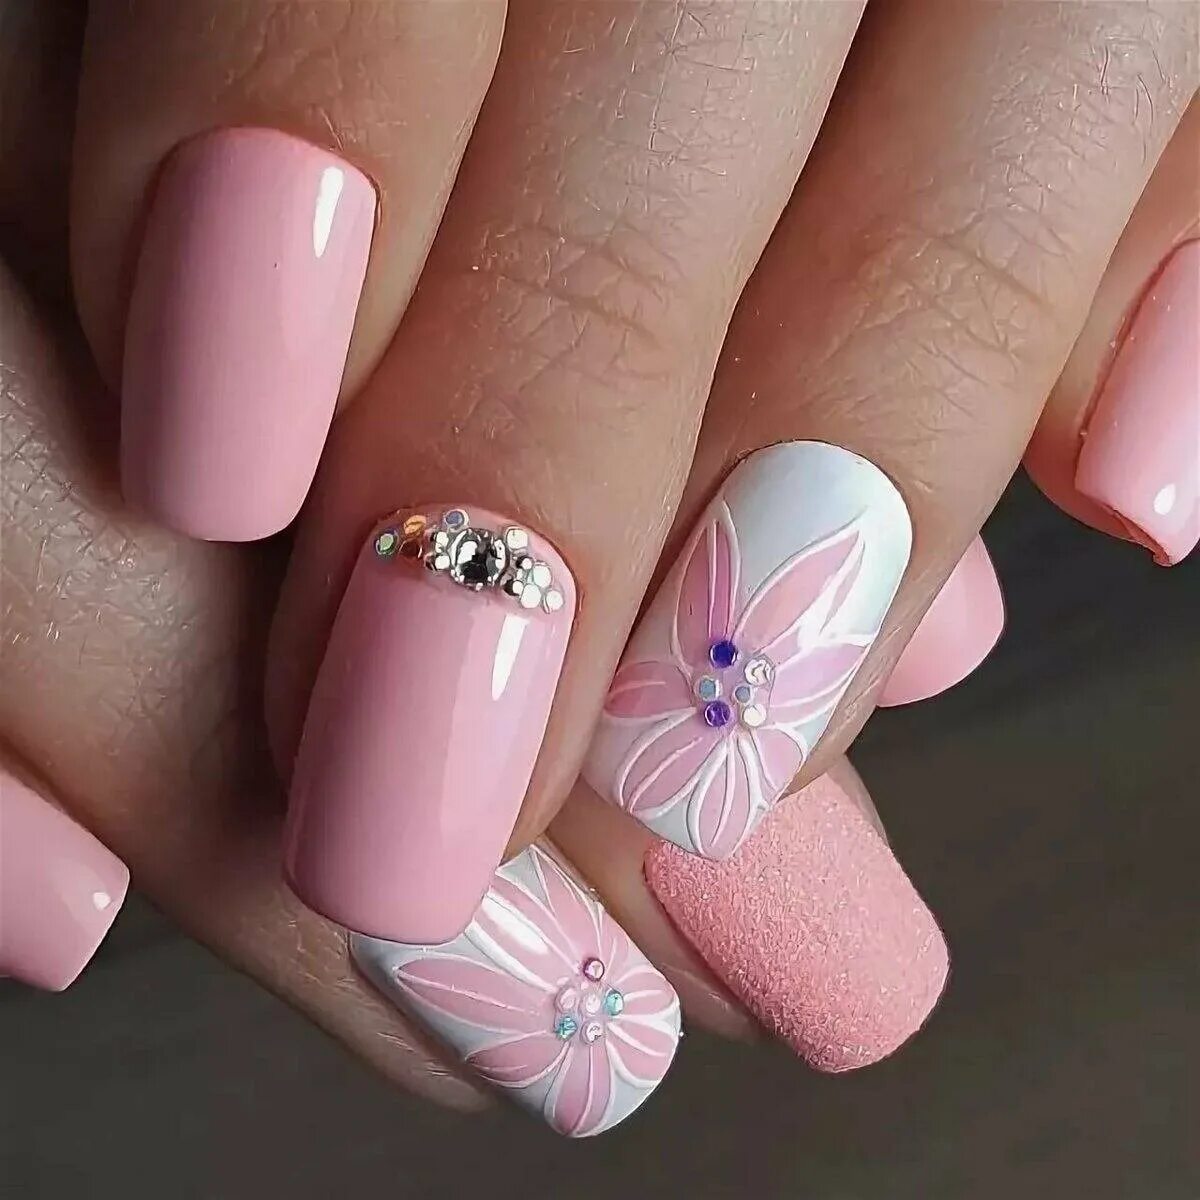 Стильный весенний маникюр. Розовый маникюр. Р̸о̸з̸о̸в̸ы̸й̸ м̸а̸н̸и̸к̸. Красивые ногти. Красивые ногти на лето.